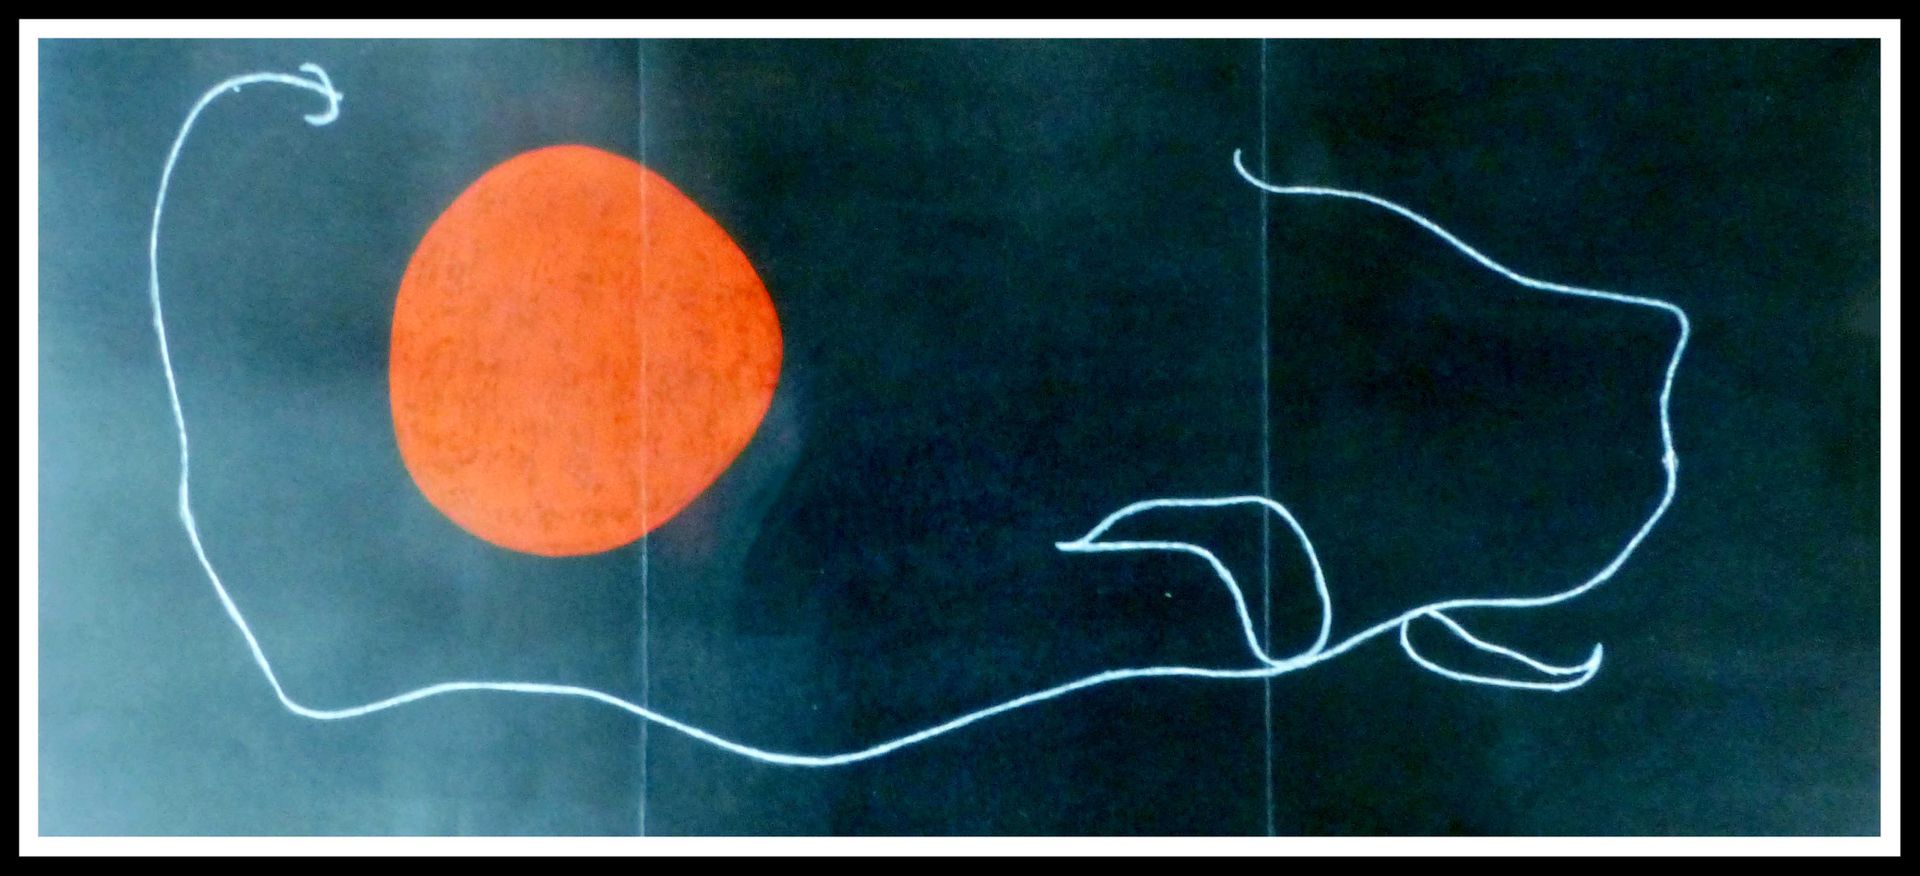 Joan Miro Joan MIRO (1893 - 1983)

Red spot composition on black background

196&hellip;